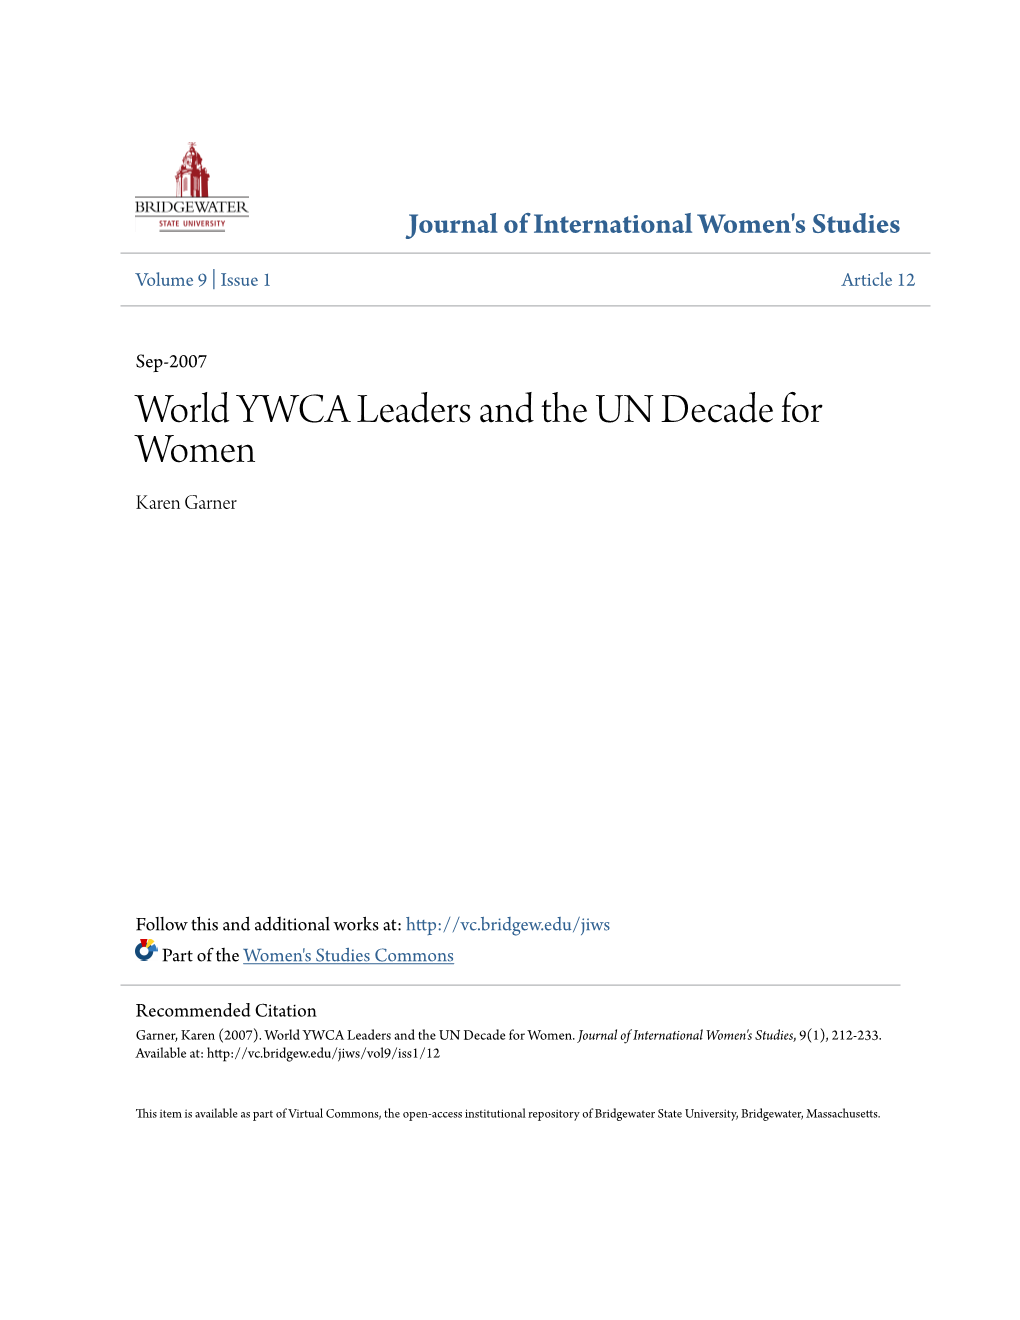 World YWCA Leaders and the UN Decade for Women Karen Garner